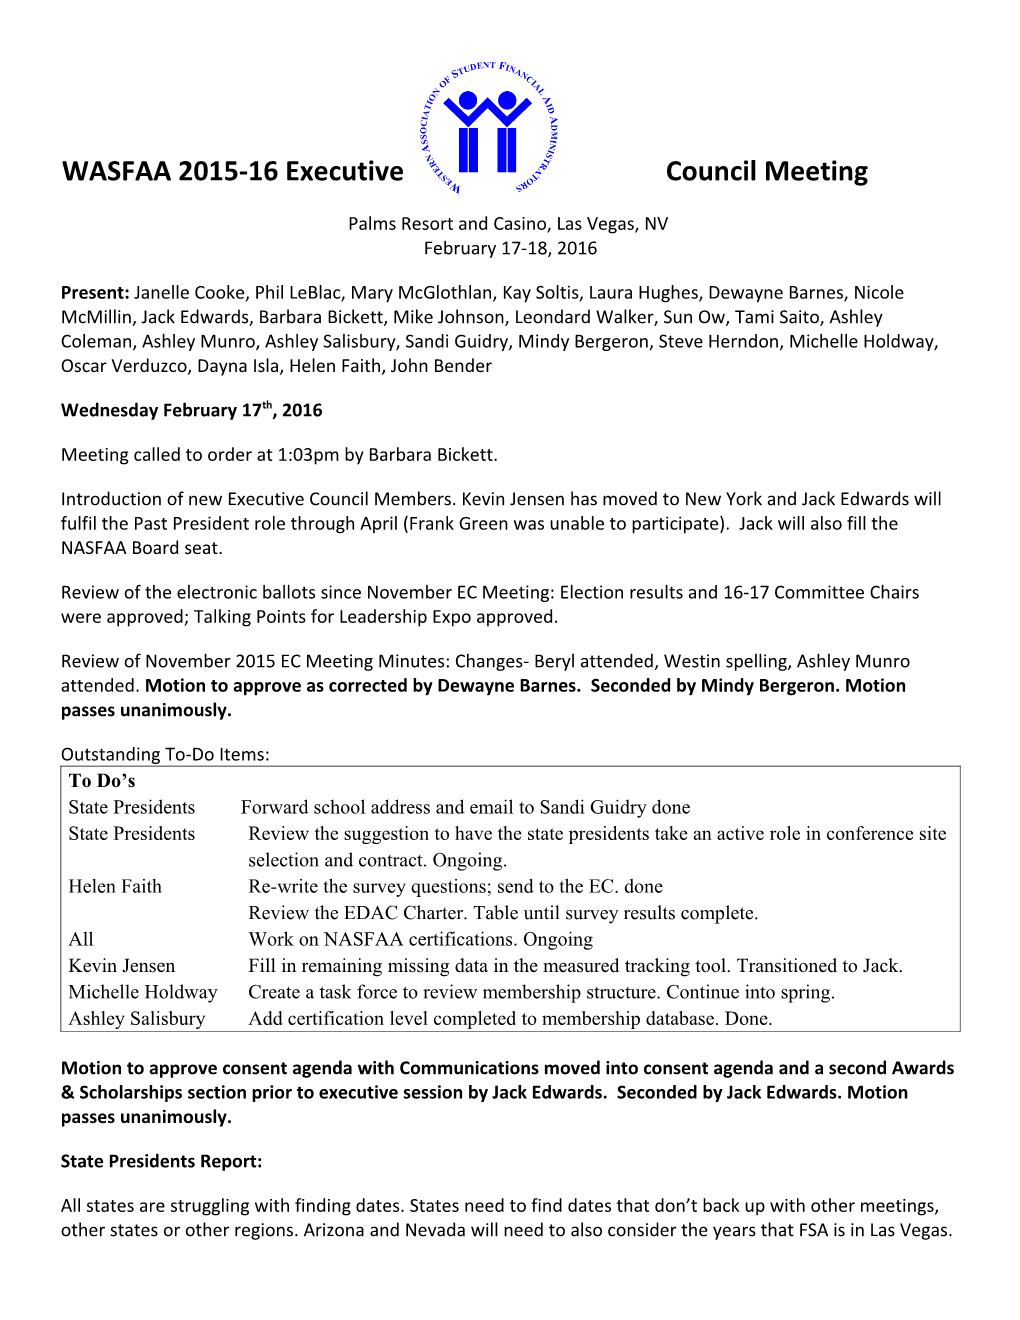 WASFAA 2015-16 Executive Council Meeting